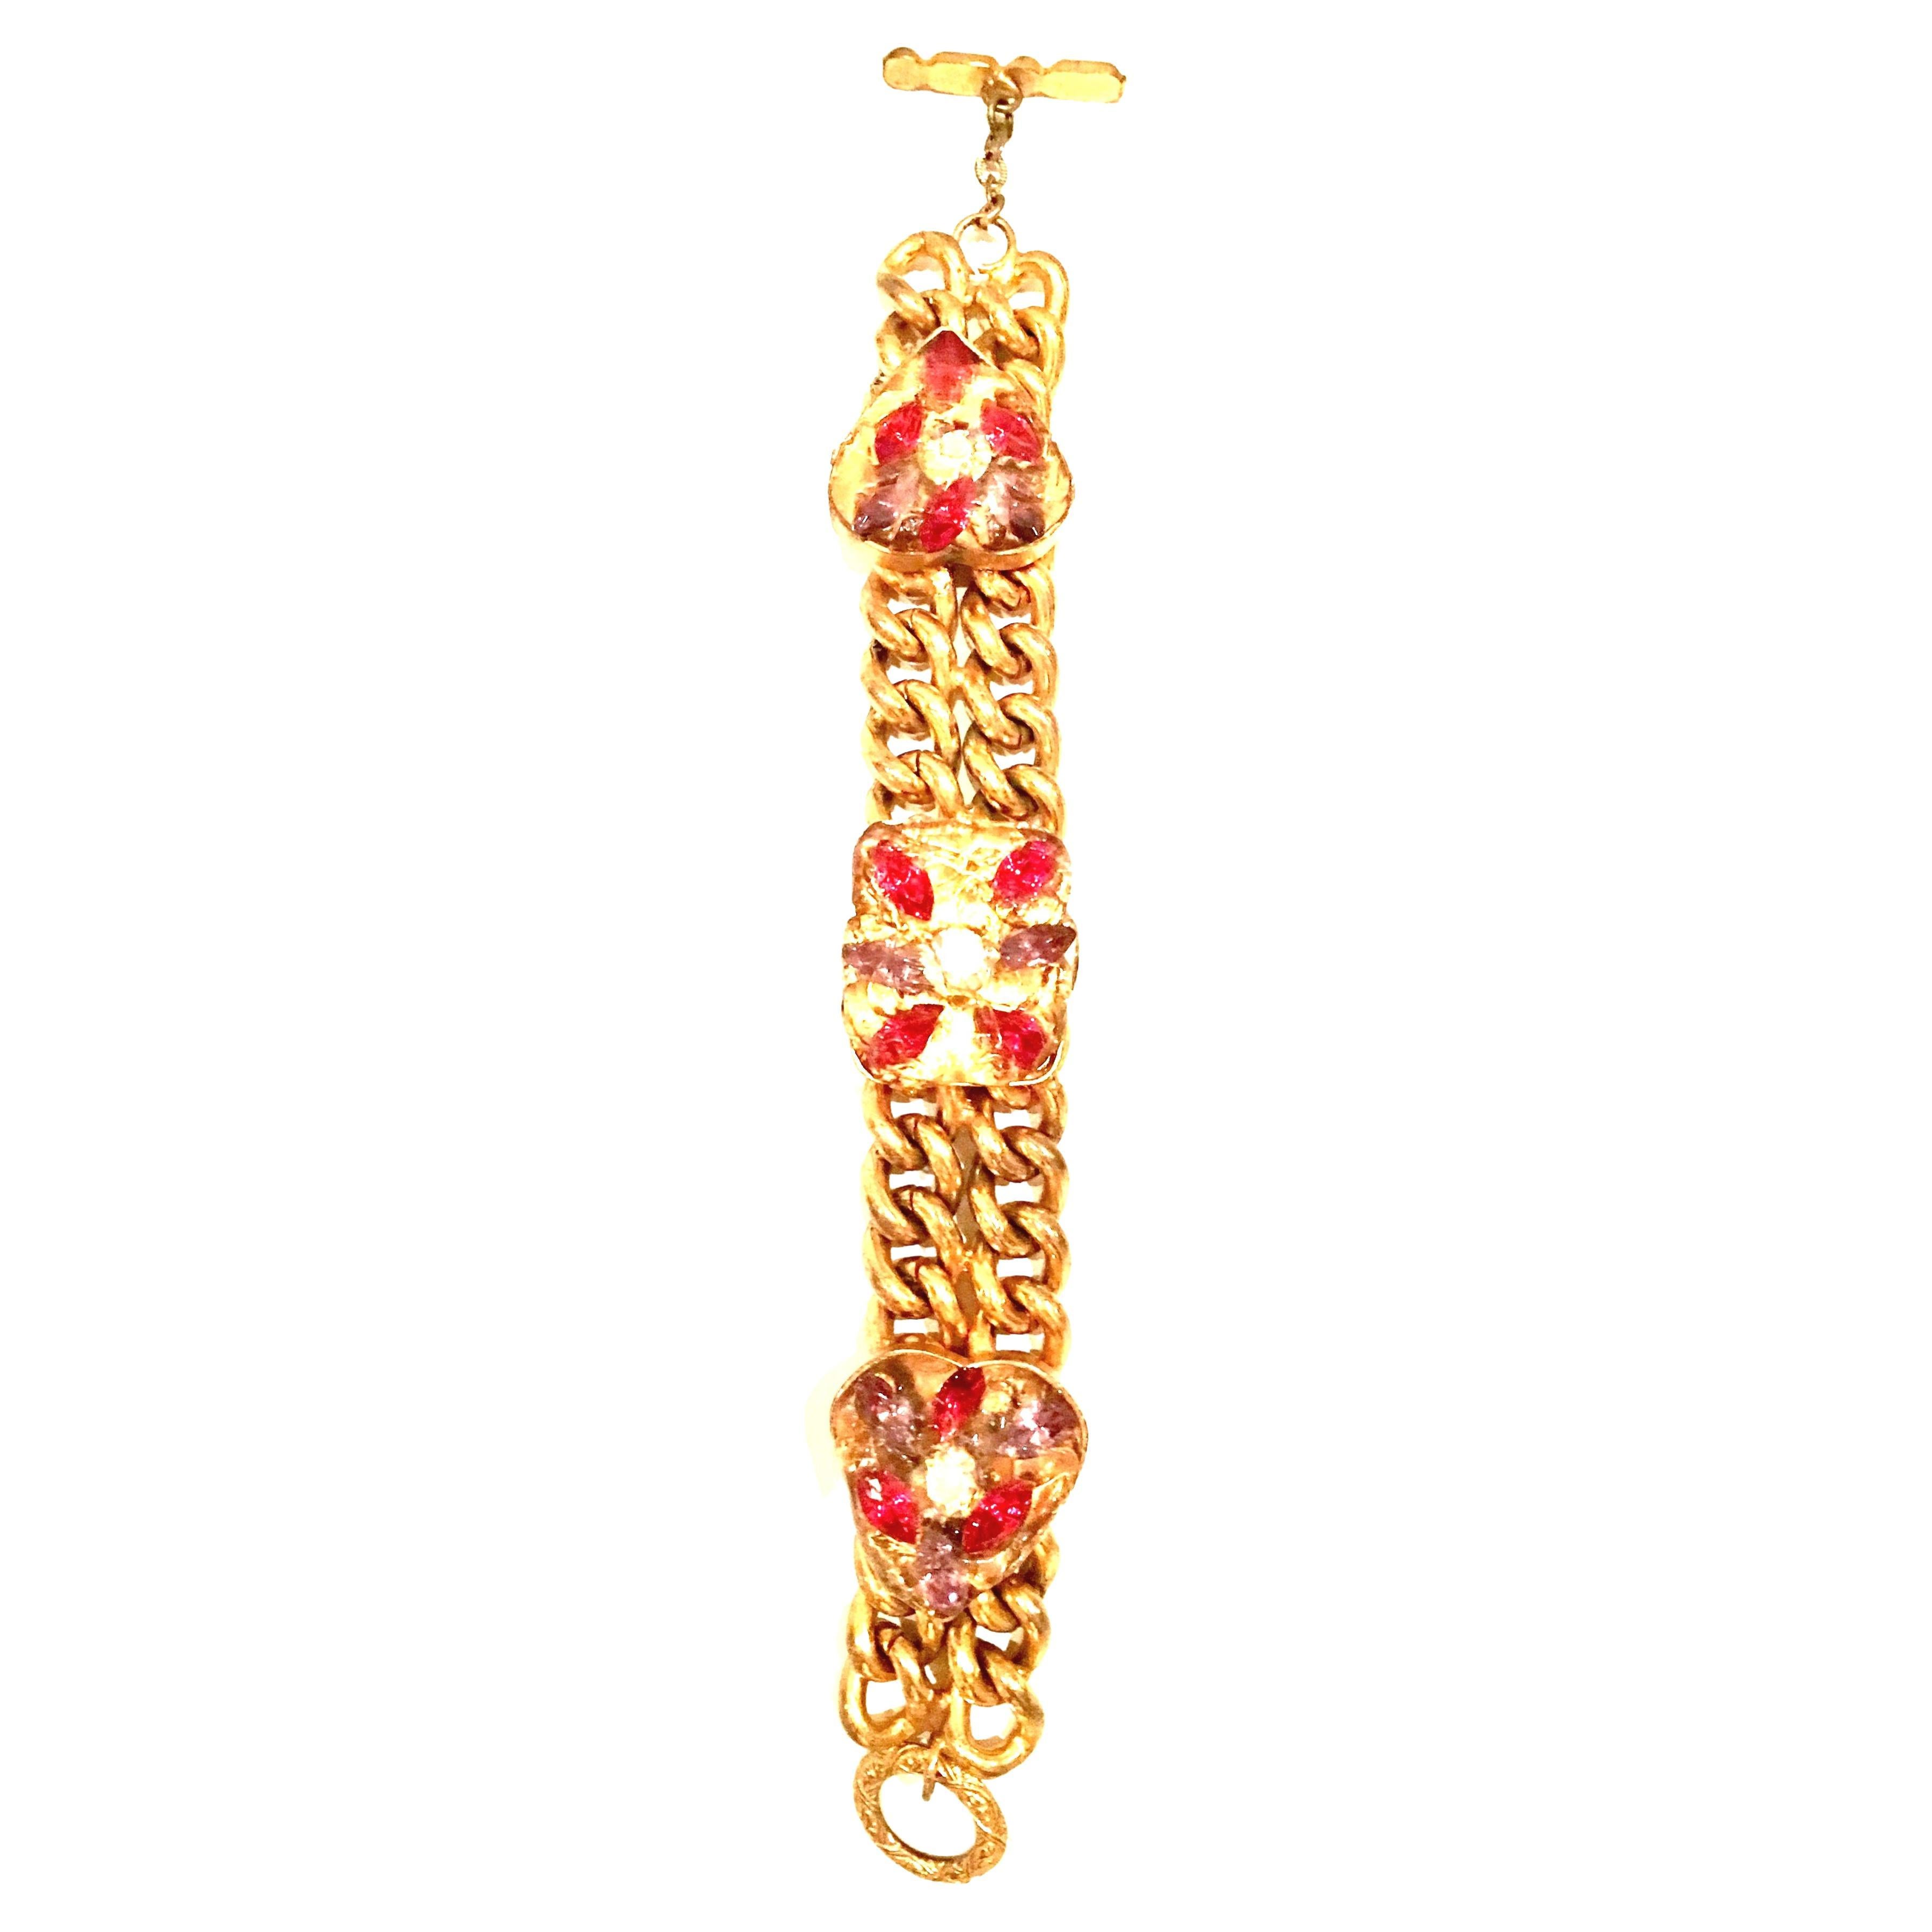 21st Century Gold Plate & Cased Molded Glass "Heart" Chain Link Bracelet For Sale